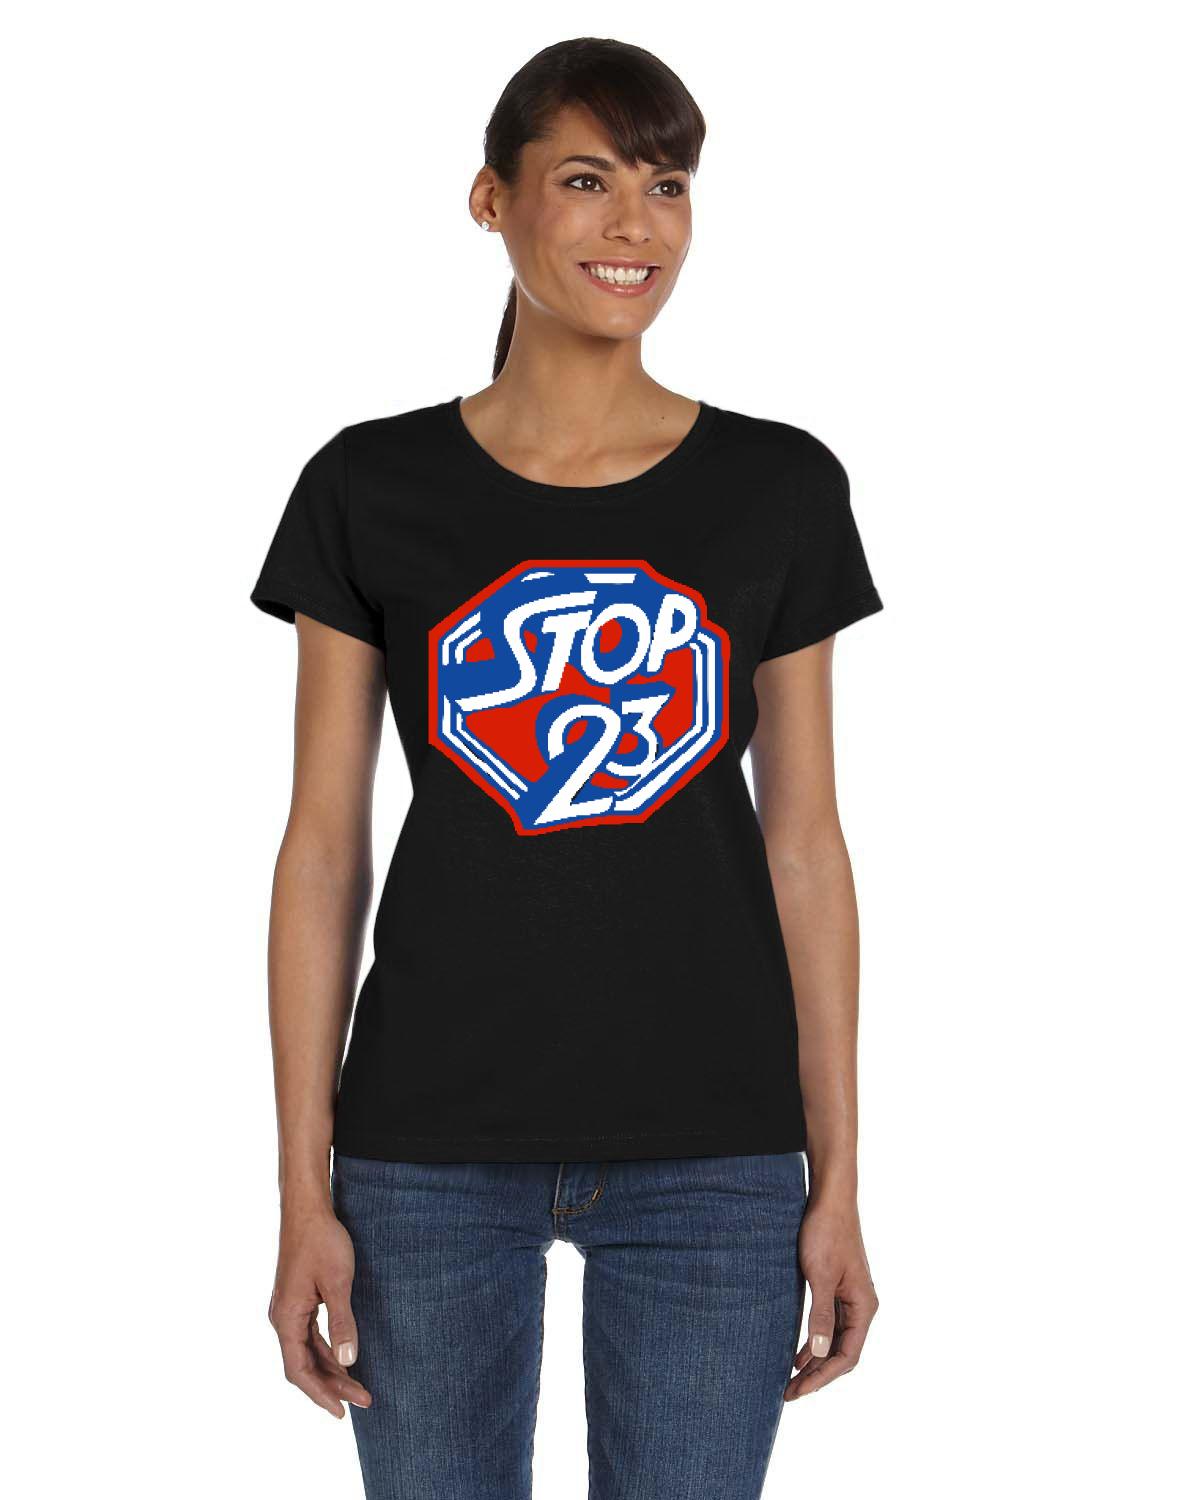 Stop 23 Ladies T-Shirt